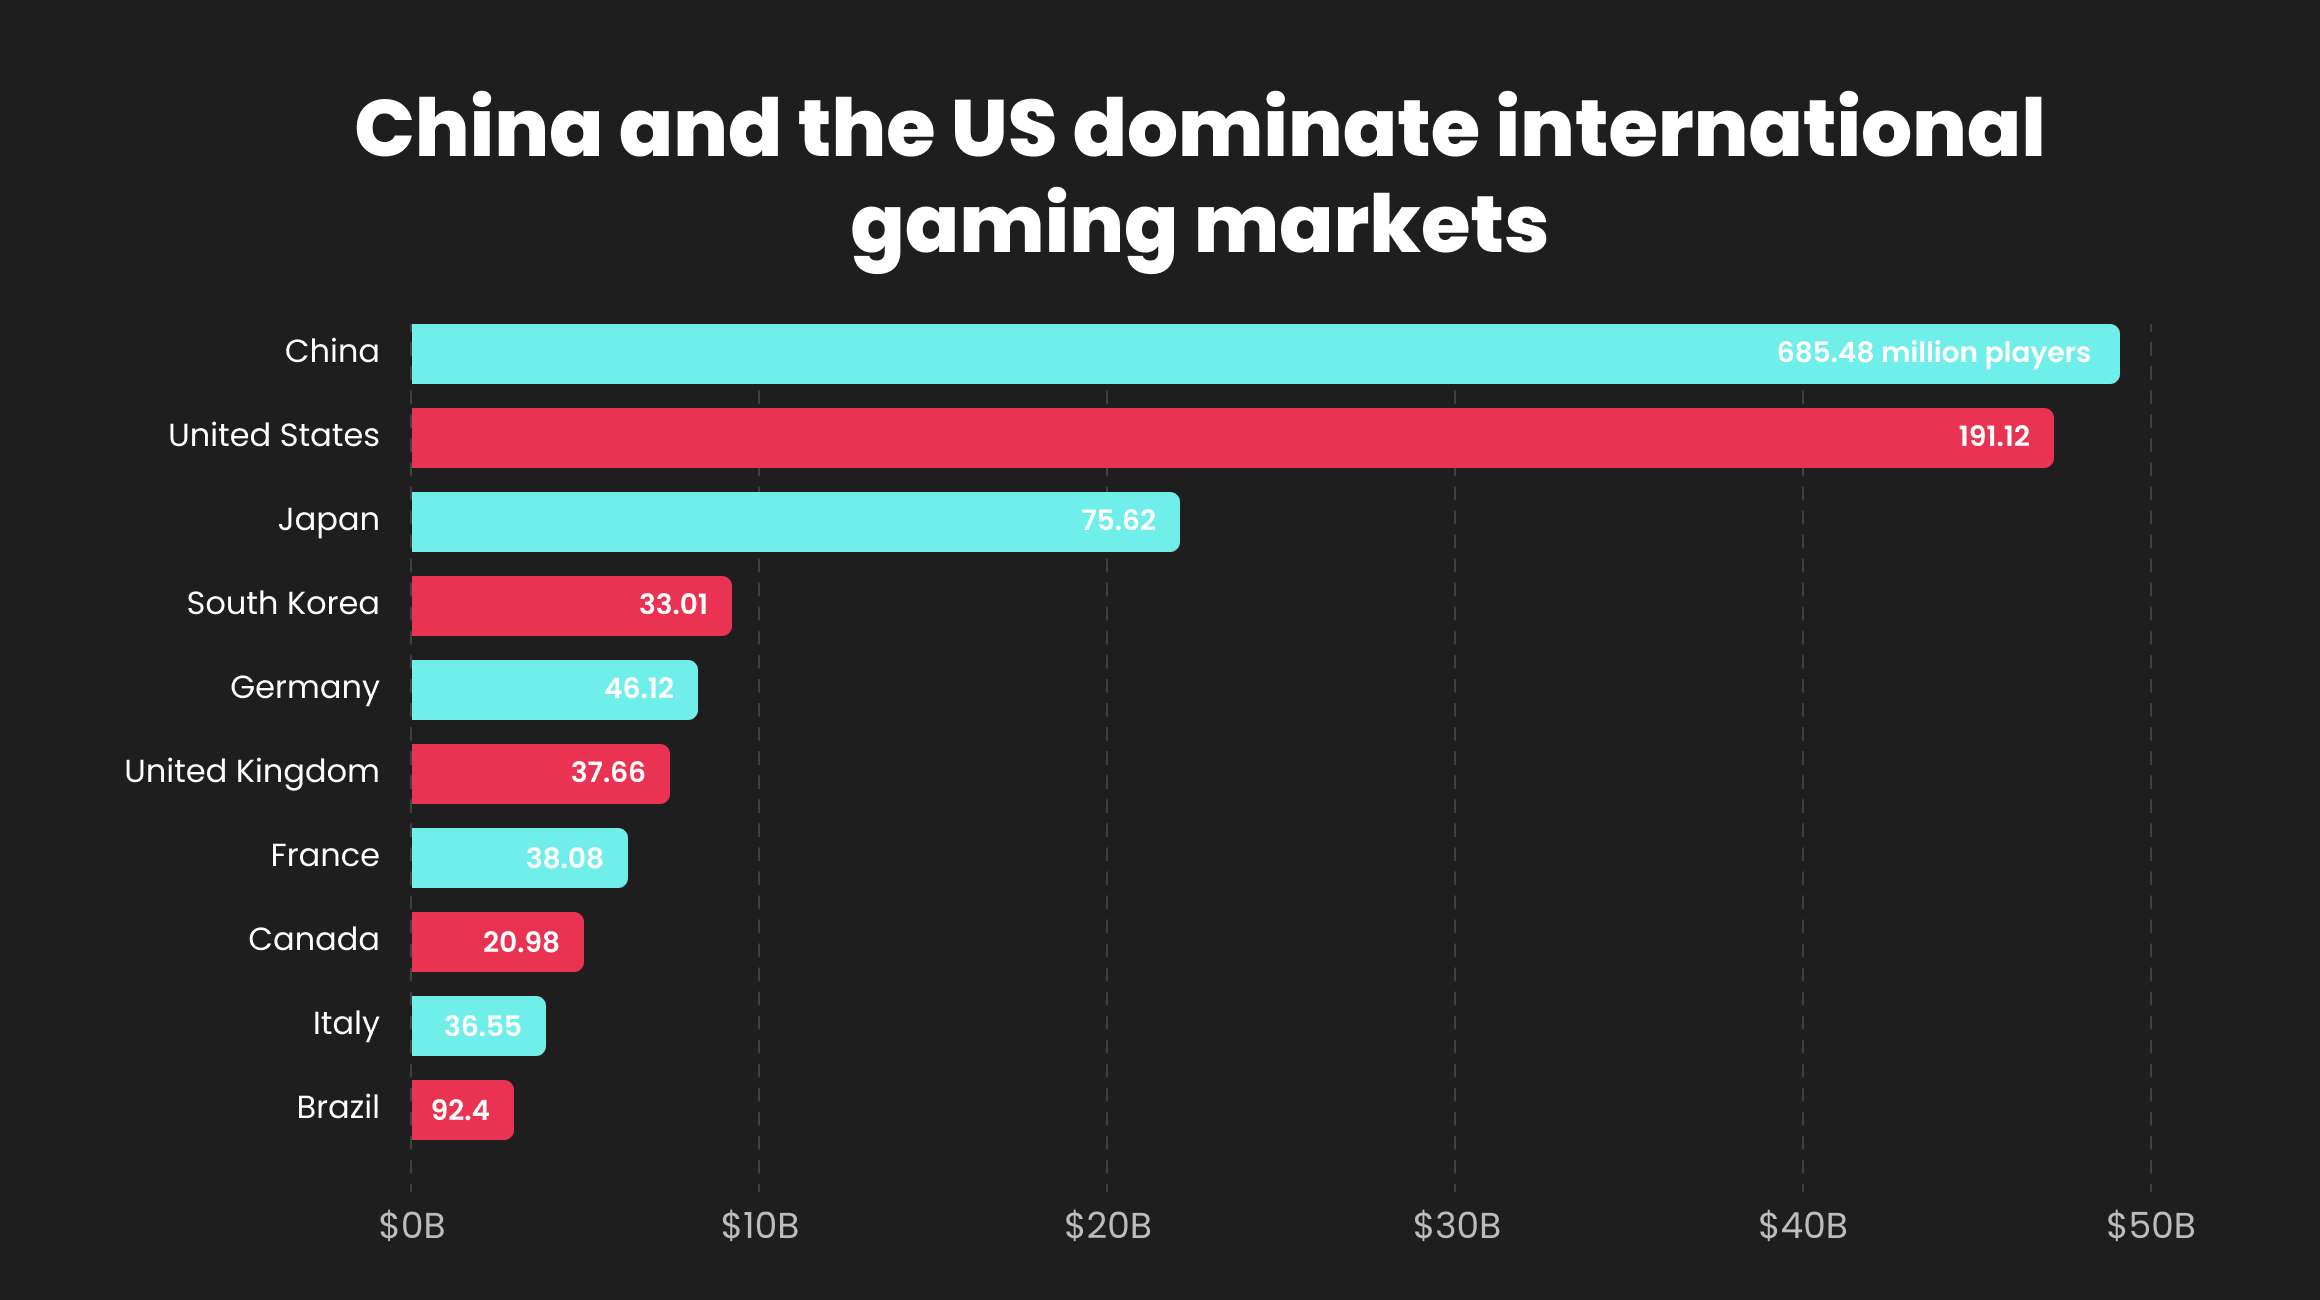 China and US dominate international gaming market